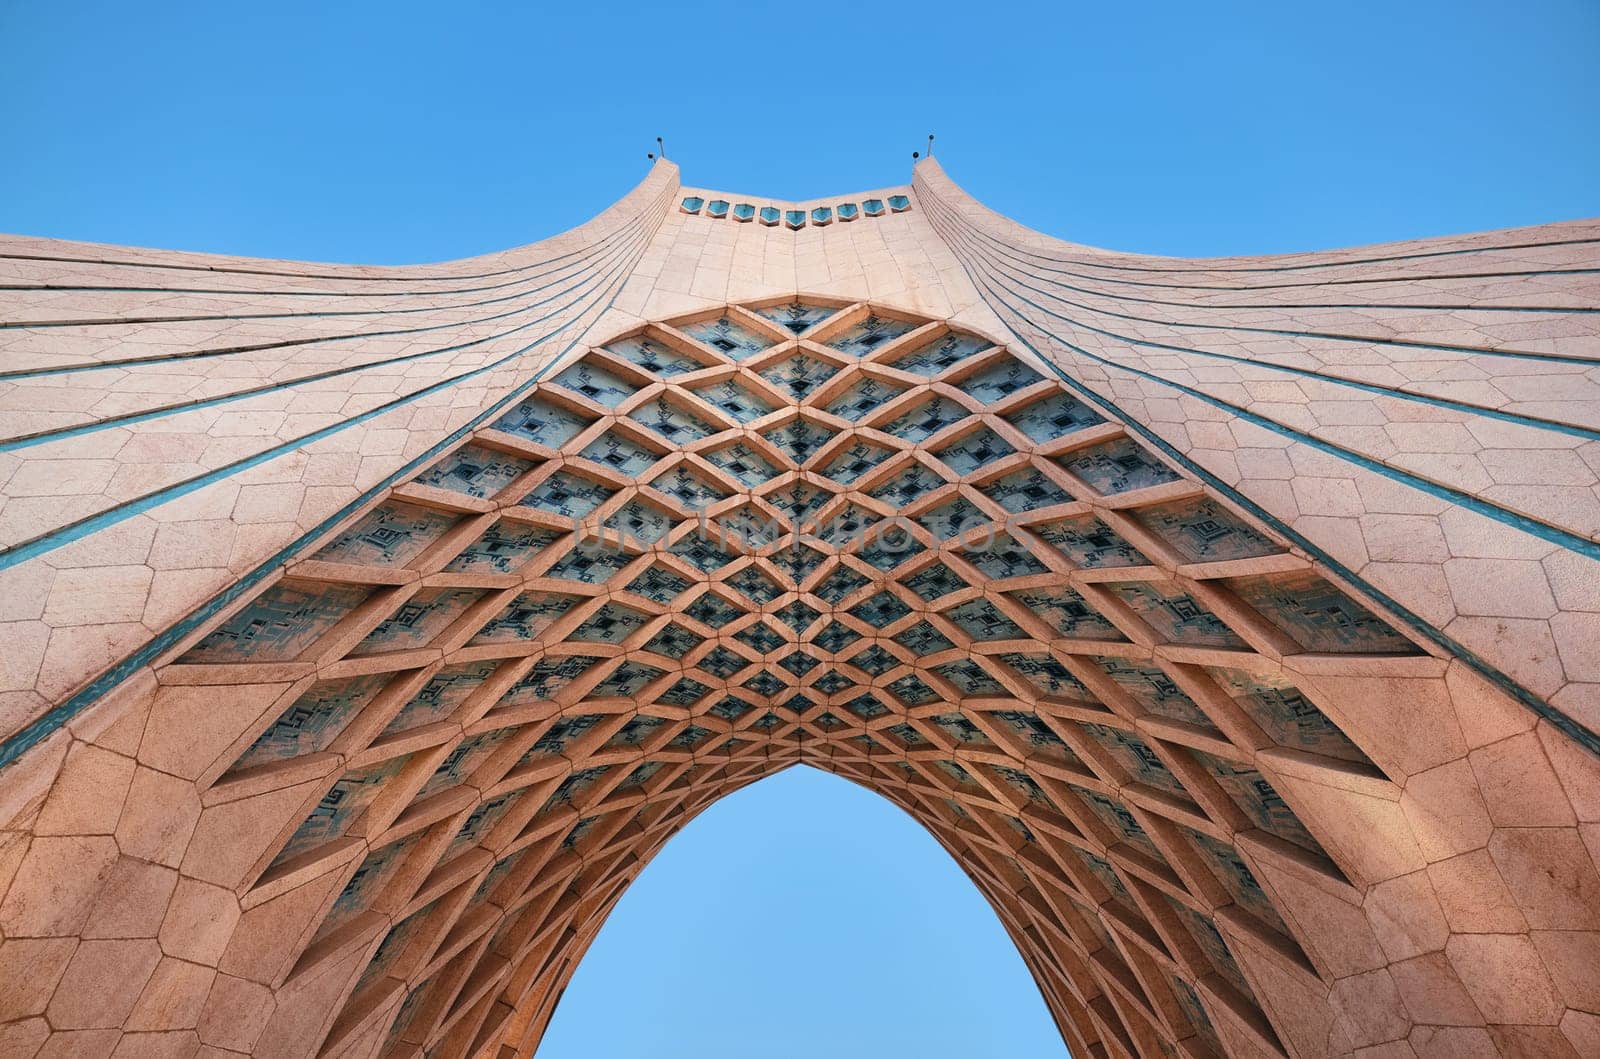 Azadi Tower is a symbol of freedom in Iran, the main symbol of Iran's capital. MS ZI LA Azadi Tower - Freedom Tower, the gateway to Tehran, Popular tourist point. 02.12.23 Tehran, Iran.